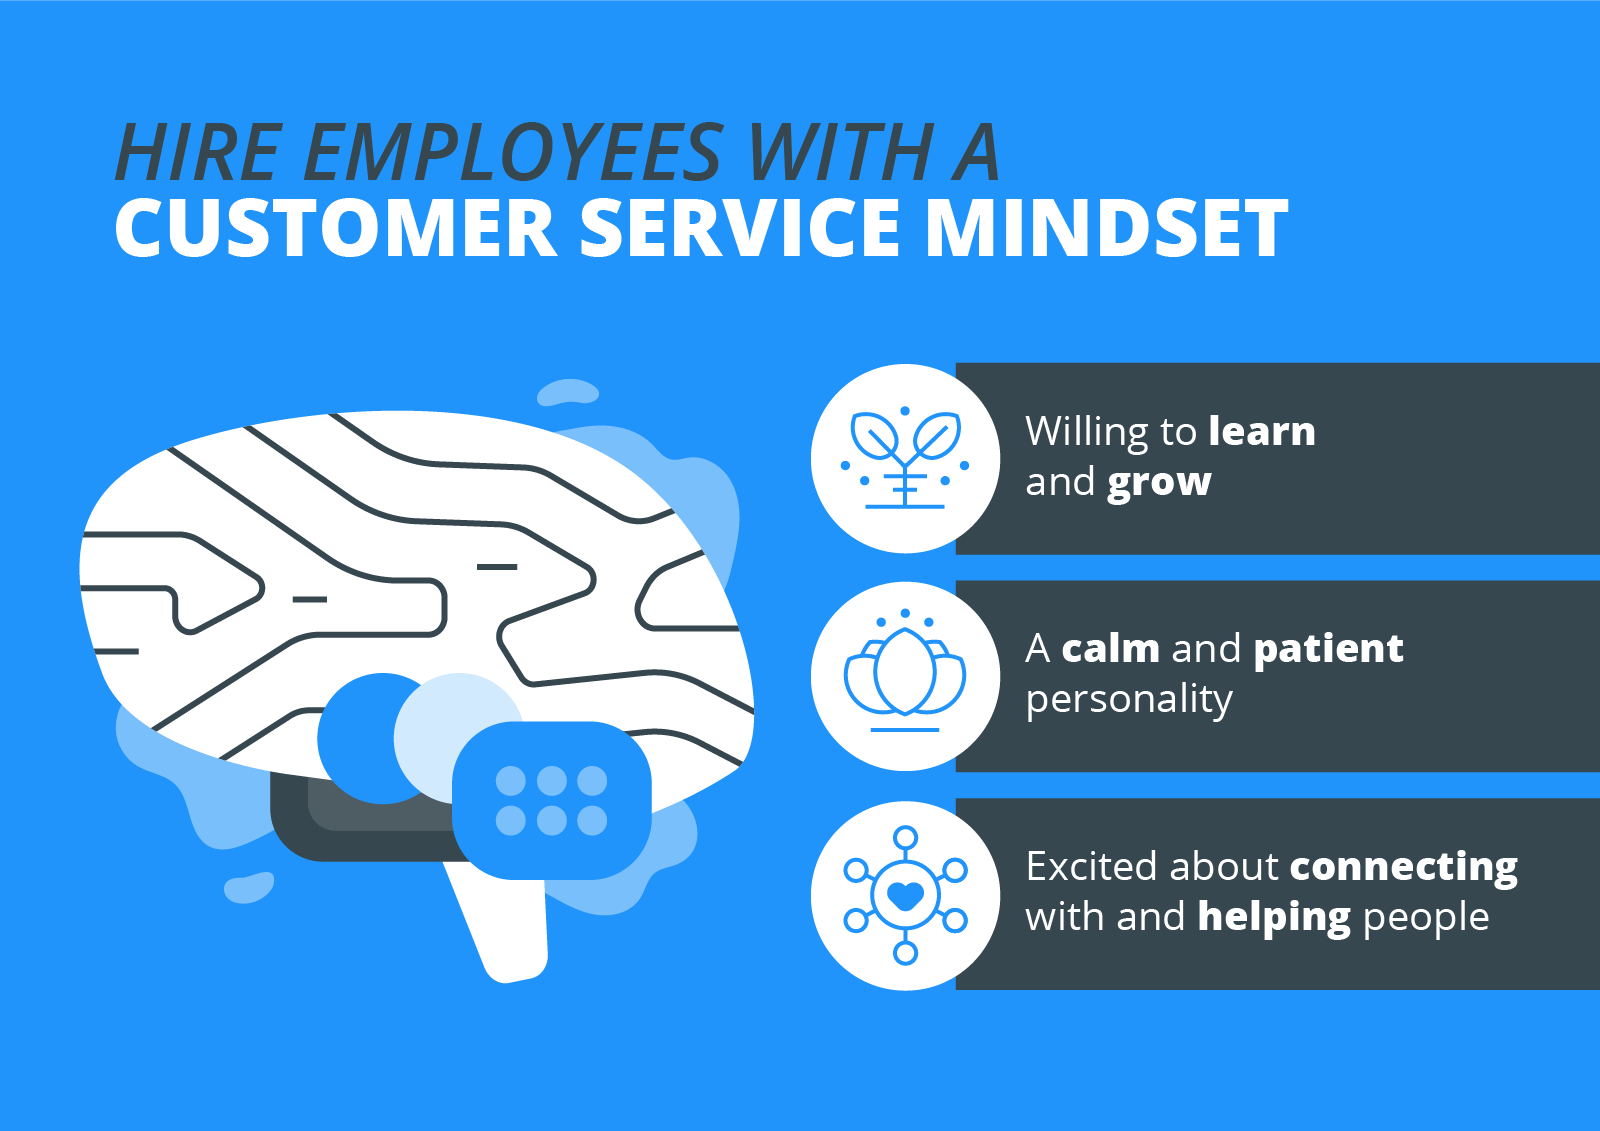 Customer service mindset